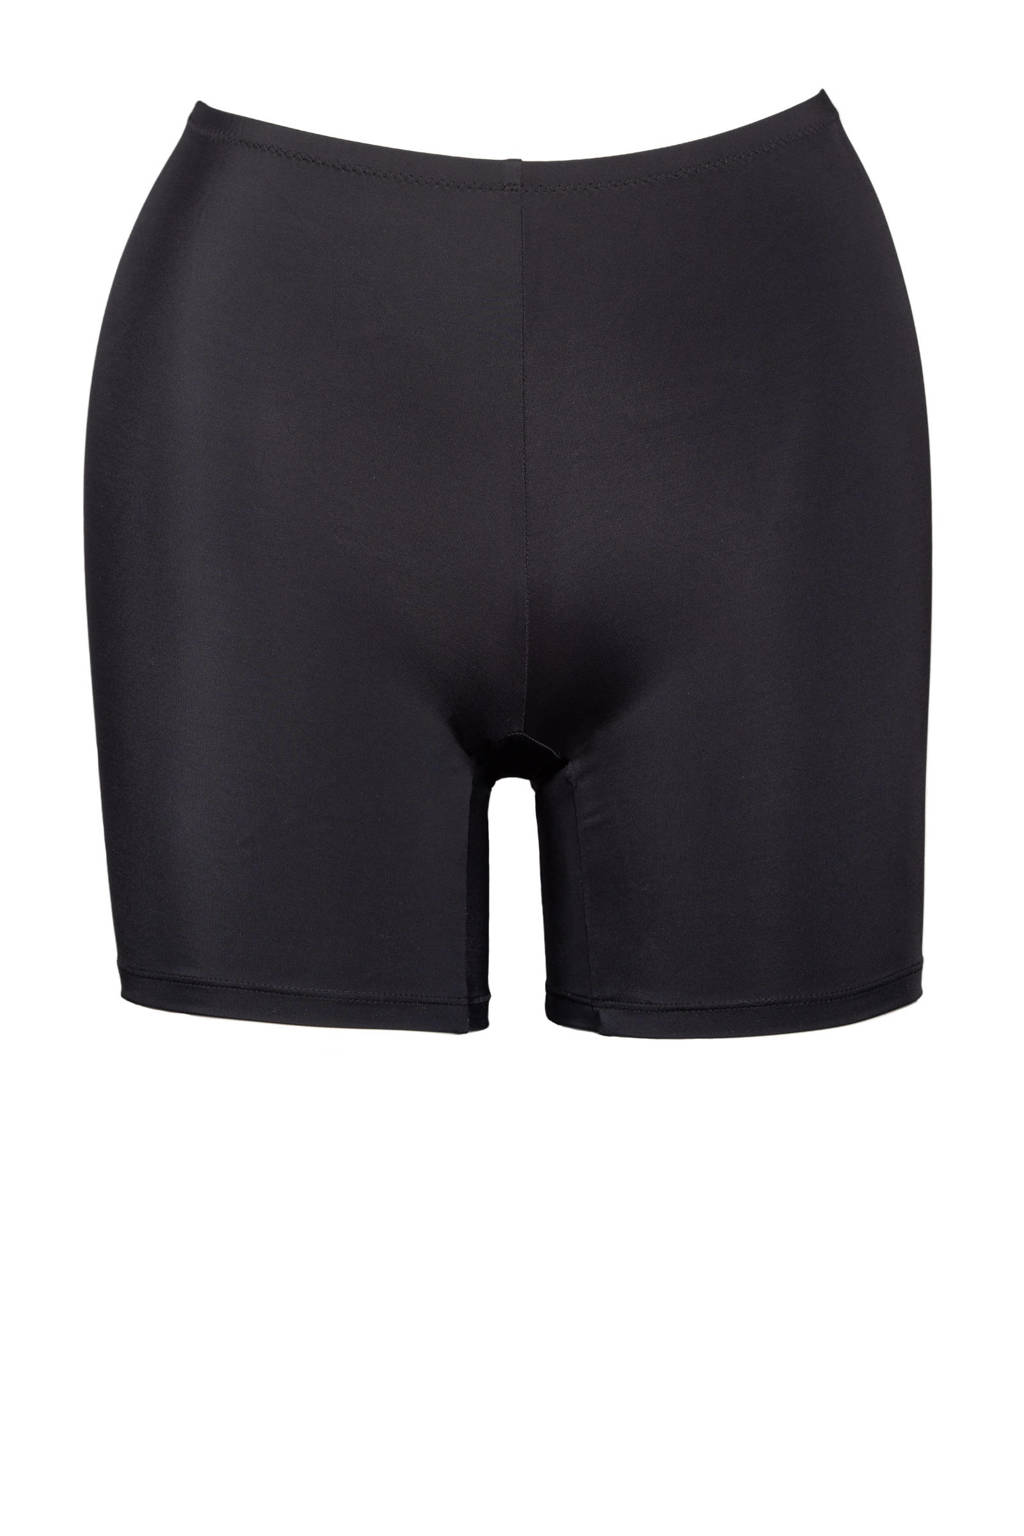 Dapperheid Spelling Opwekking Plaisir +size high waist short bikinibroekje met pijpjes zwart | wehkamp